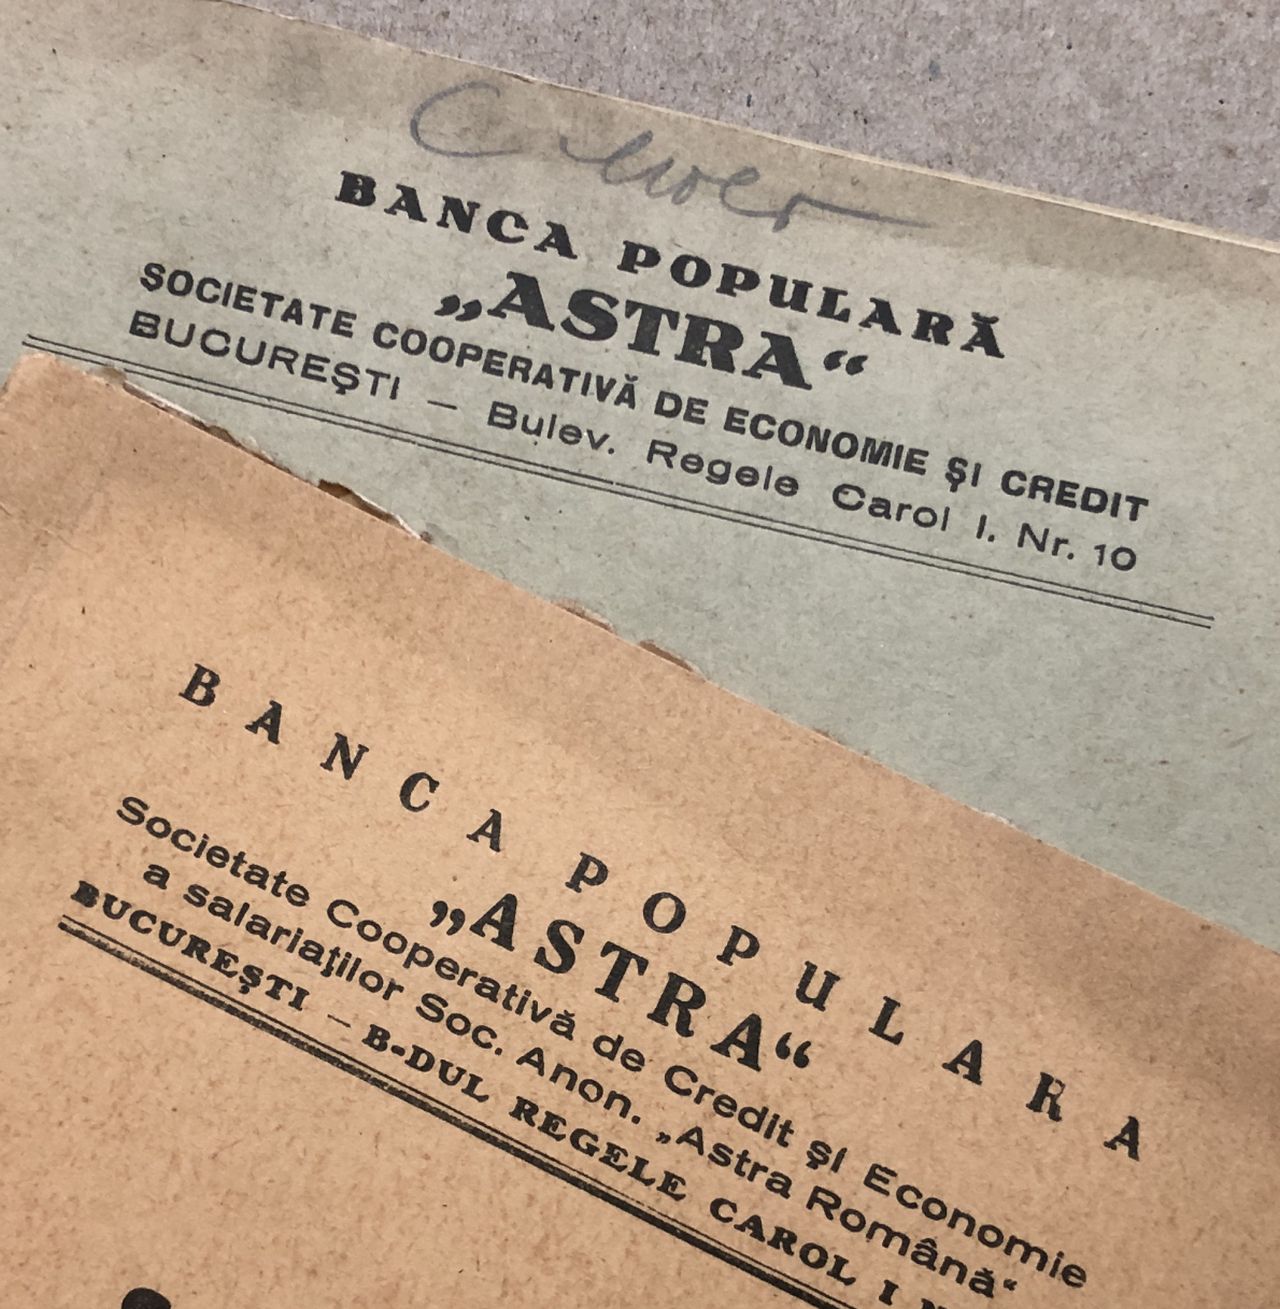 sink praise Production Banca Populara Astra, doua brosuri, Raport CA si Statut votat in AGA, anii  30, Romania Mare (cc08) – kolectionarul.ro